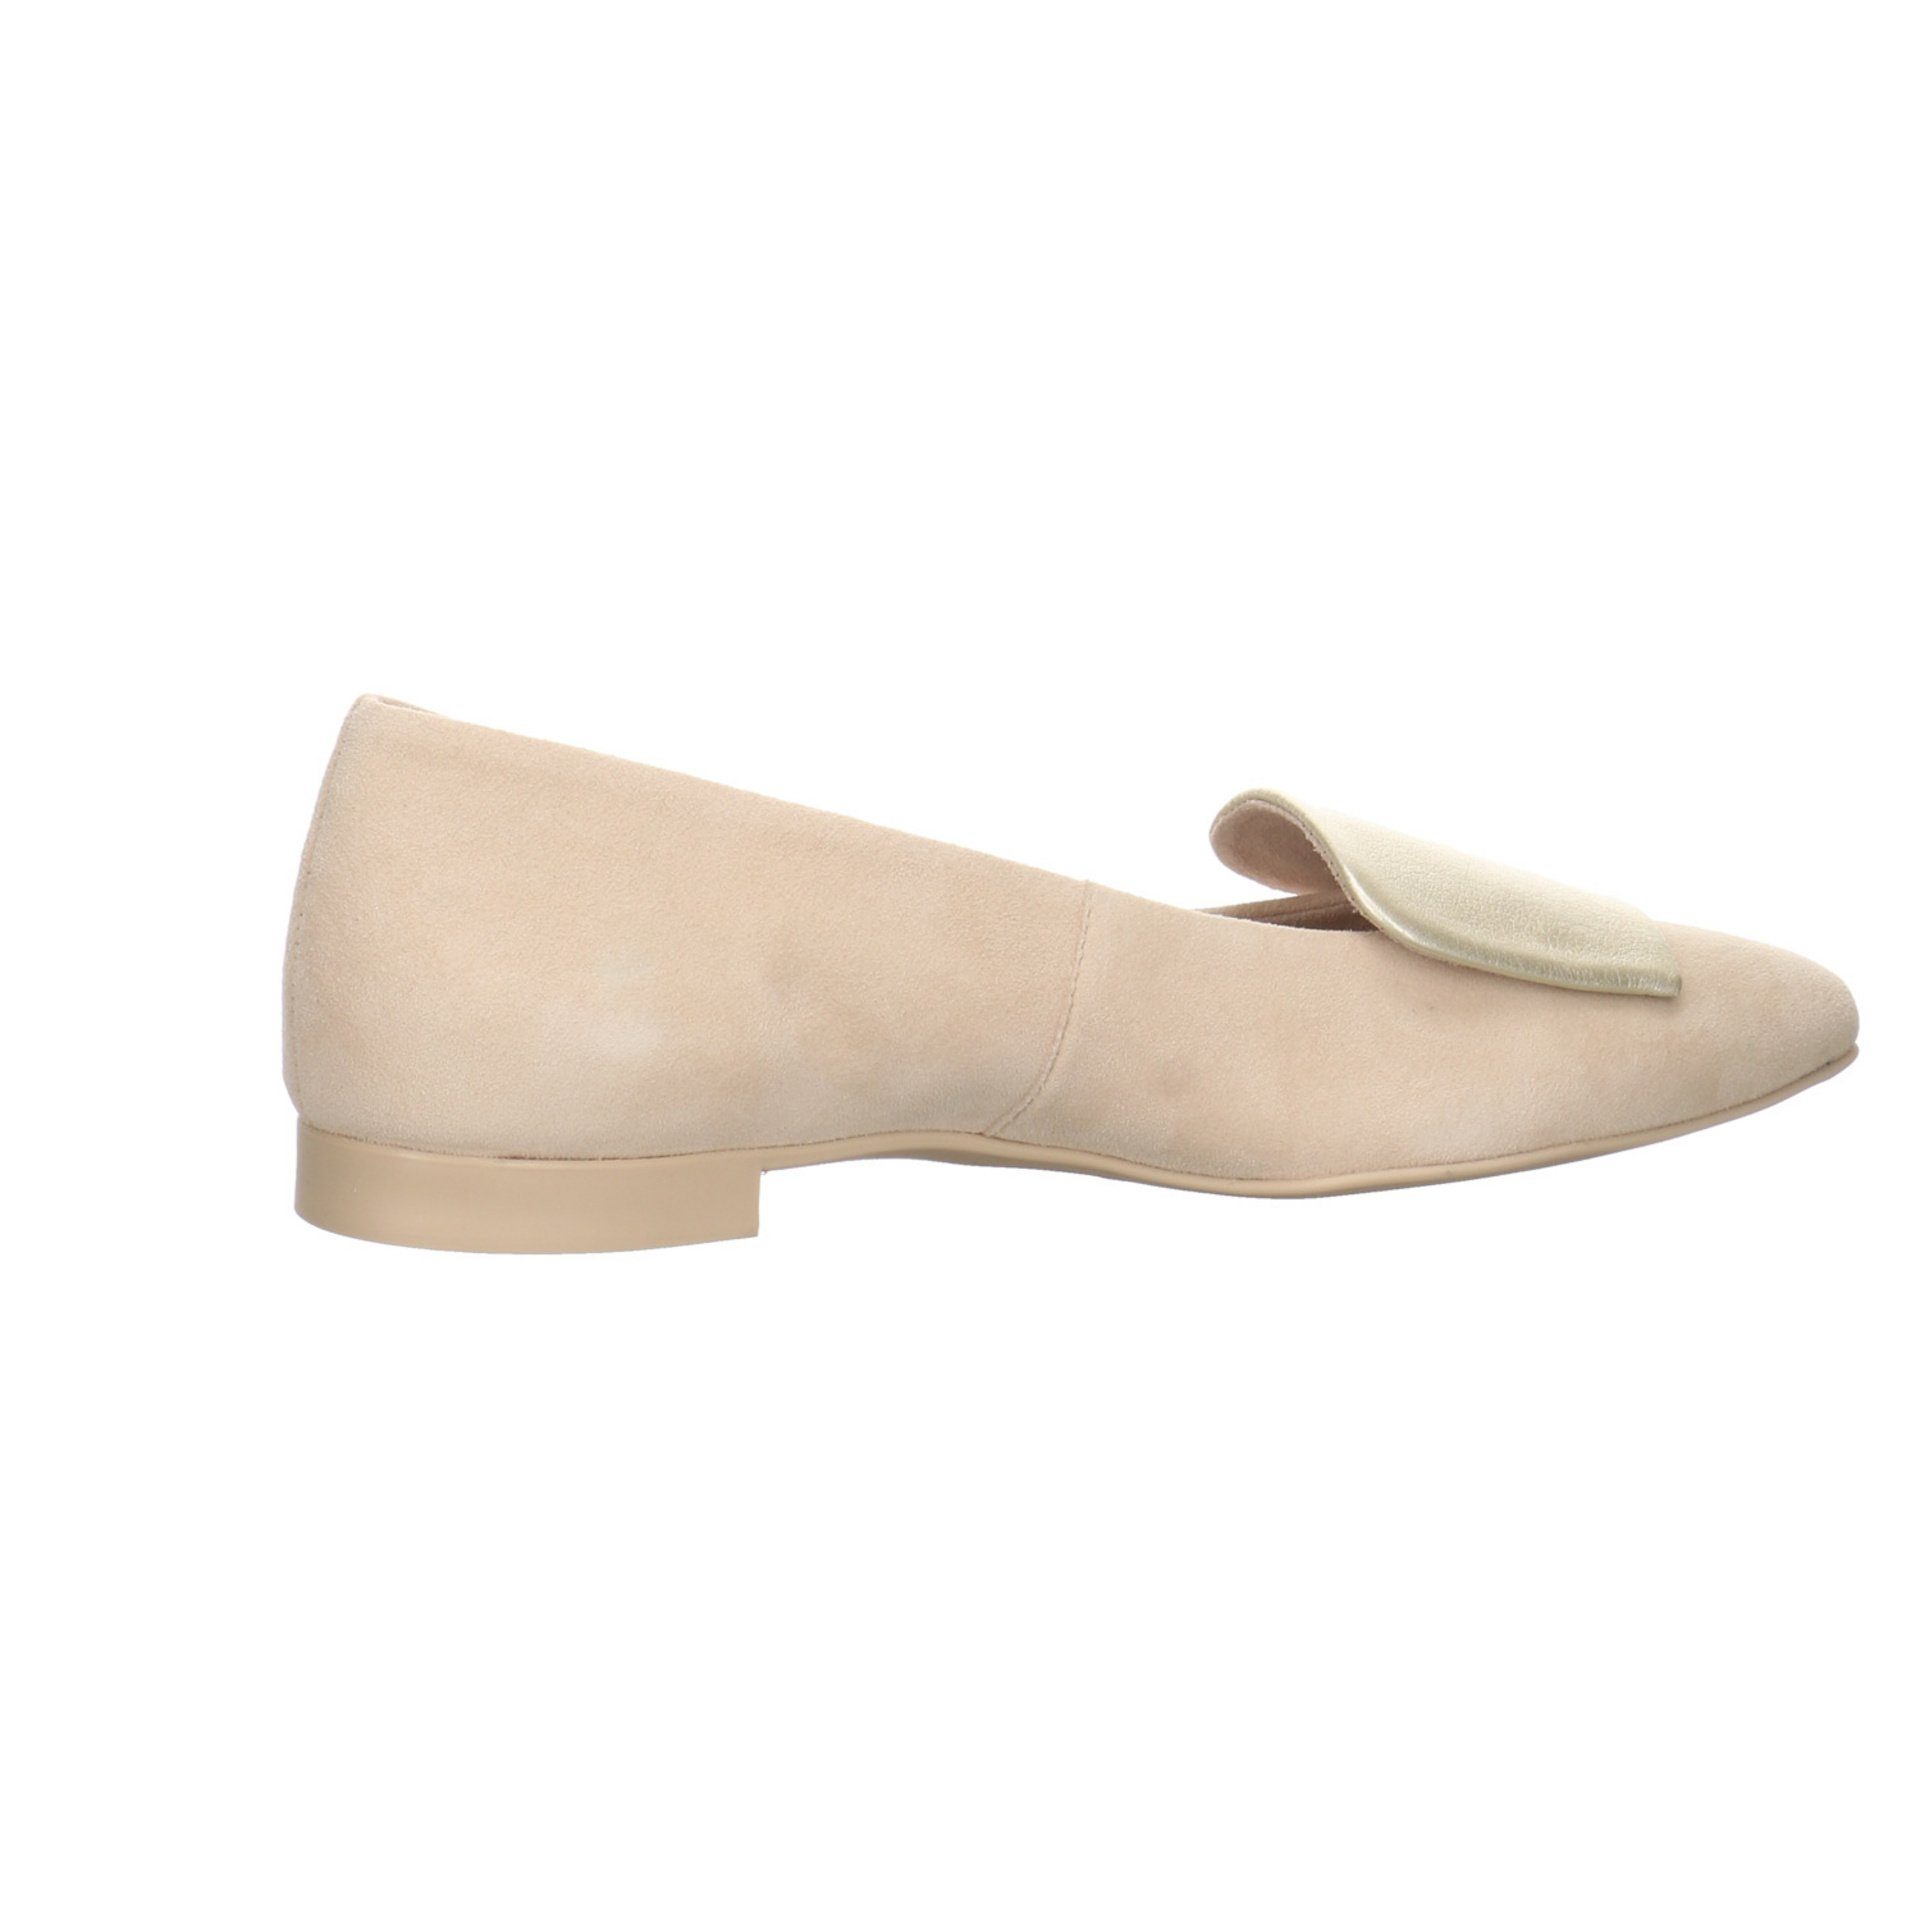 Paul Green Ballerinas Schuhe Bequem Ballerina Veloursleder biscuit/palegold Flats Ballerina